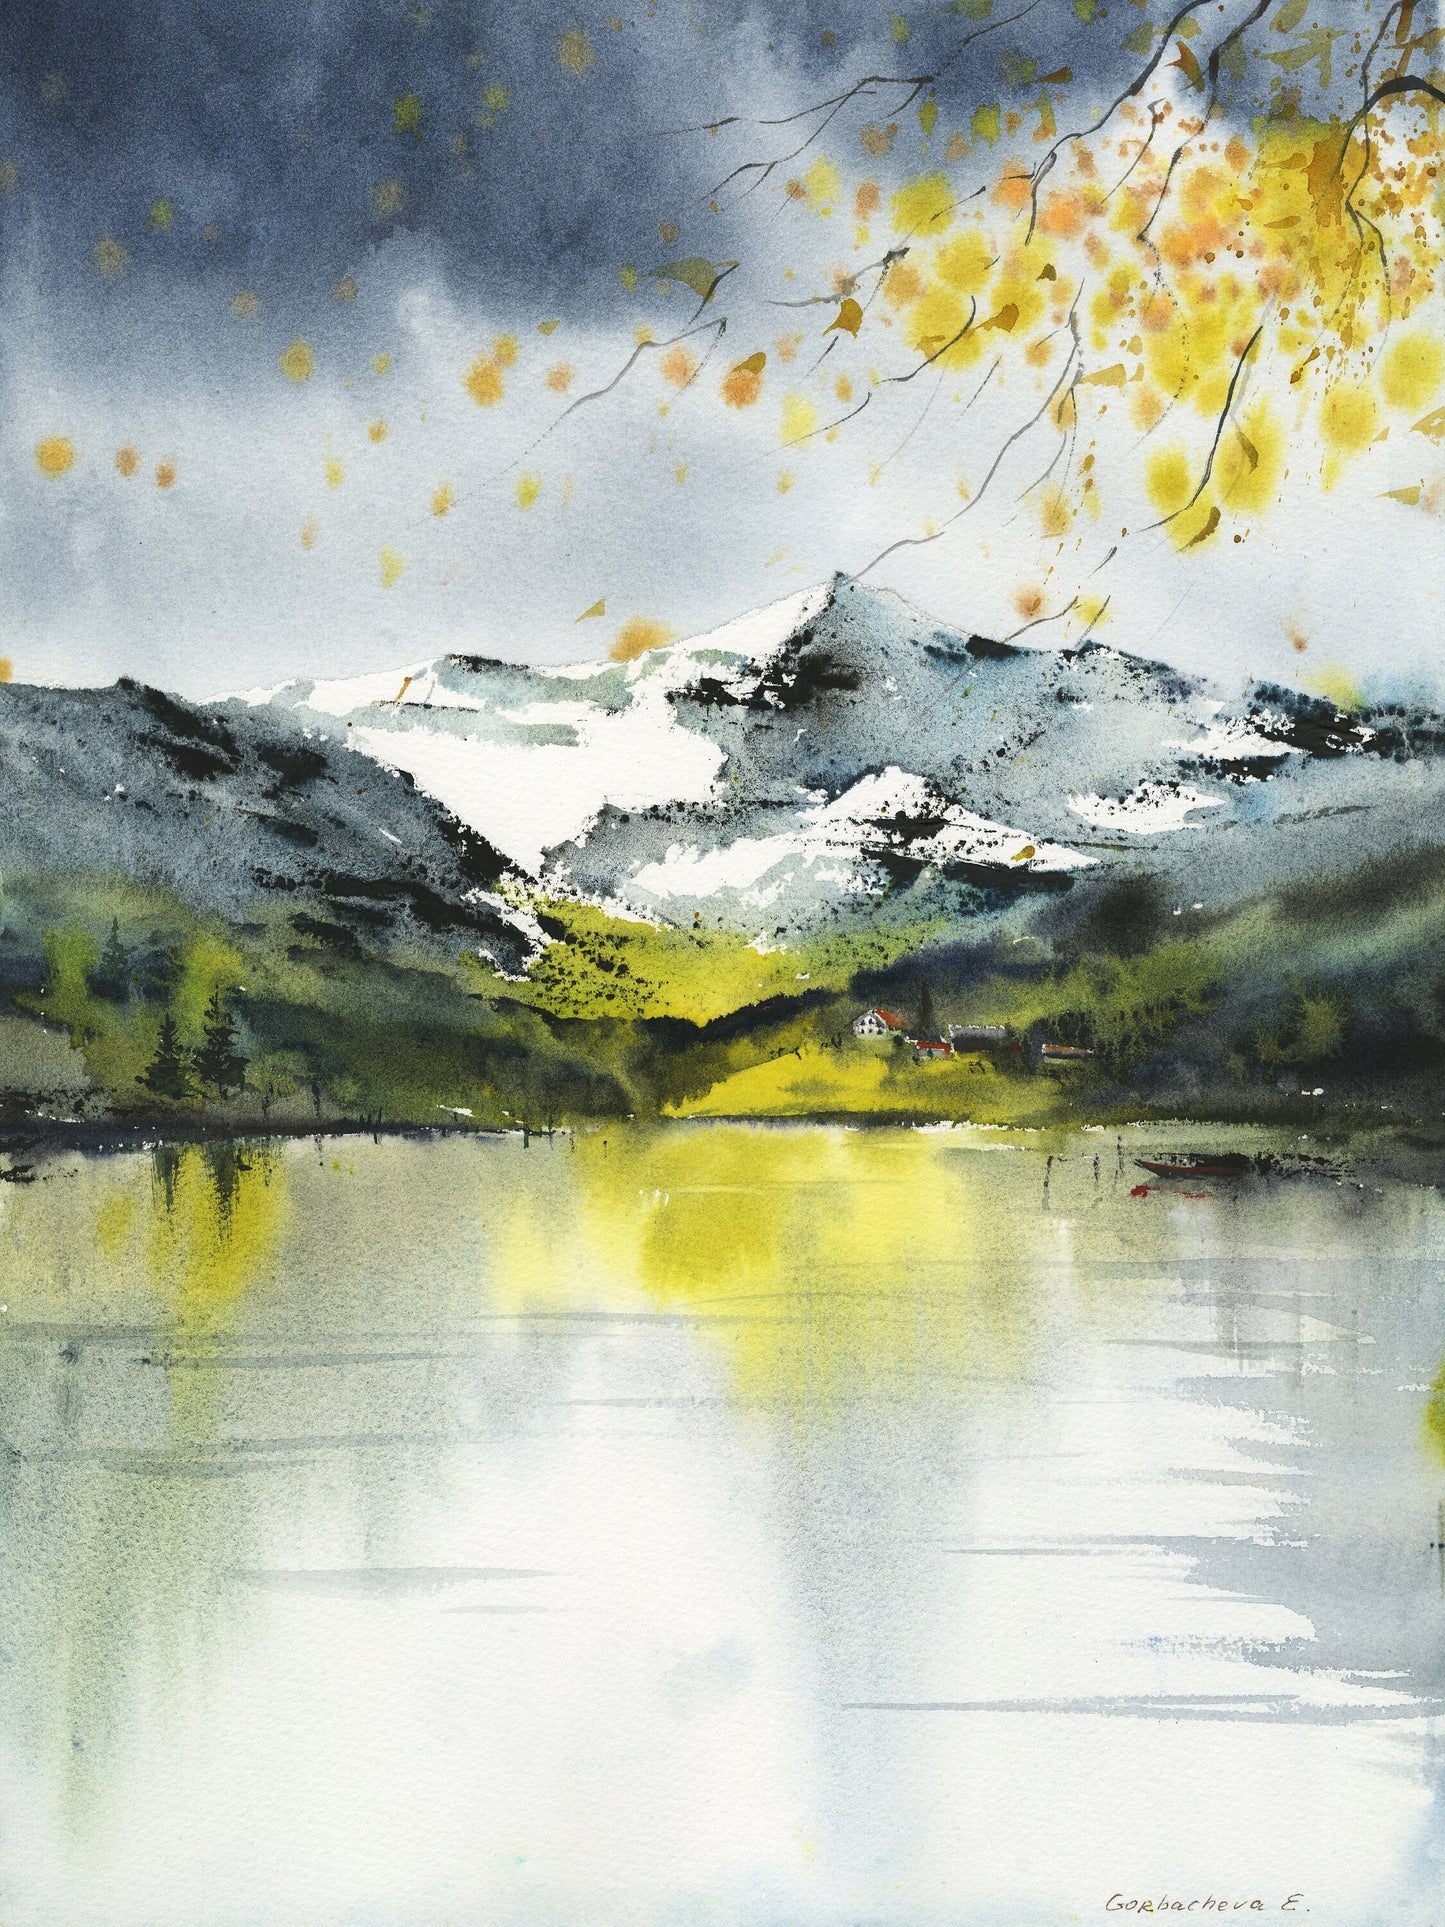 Abstract Mountain Lake Print Set of 2, Lemon Yellow Landscape Wall Art, Modern Art Scenery Paintings